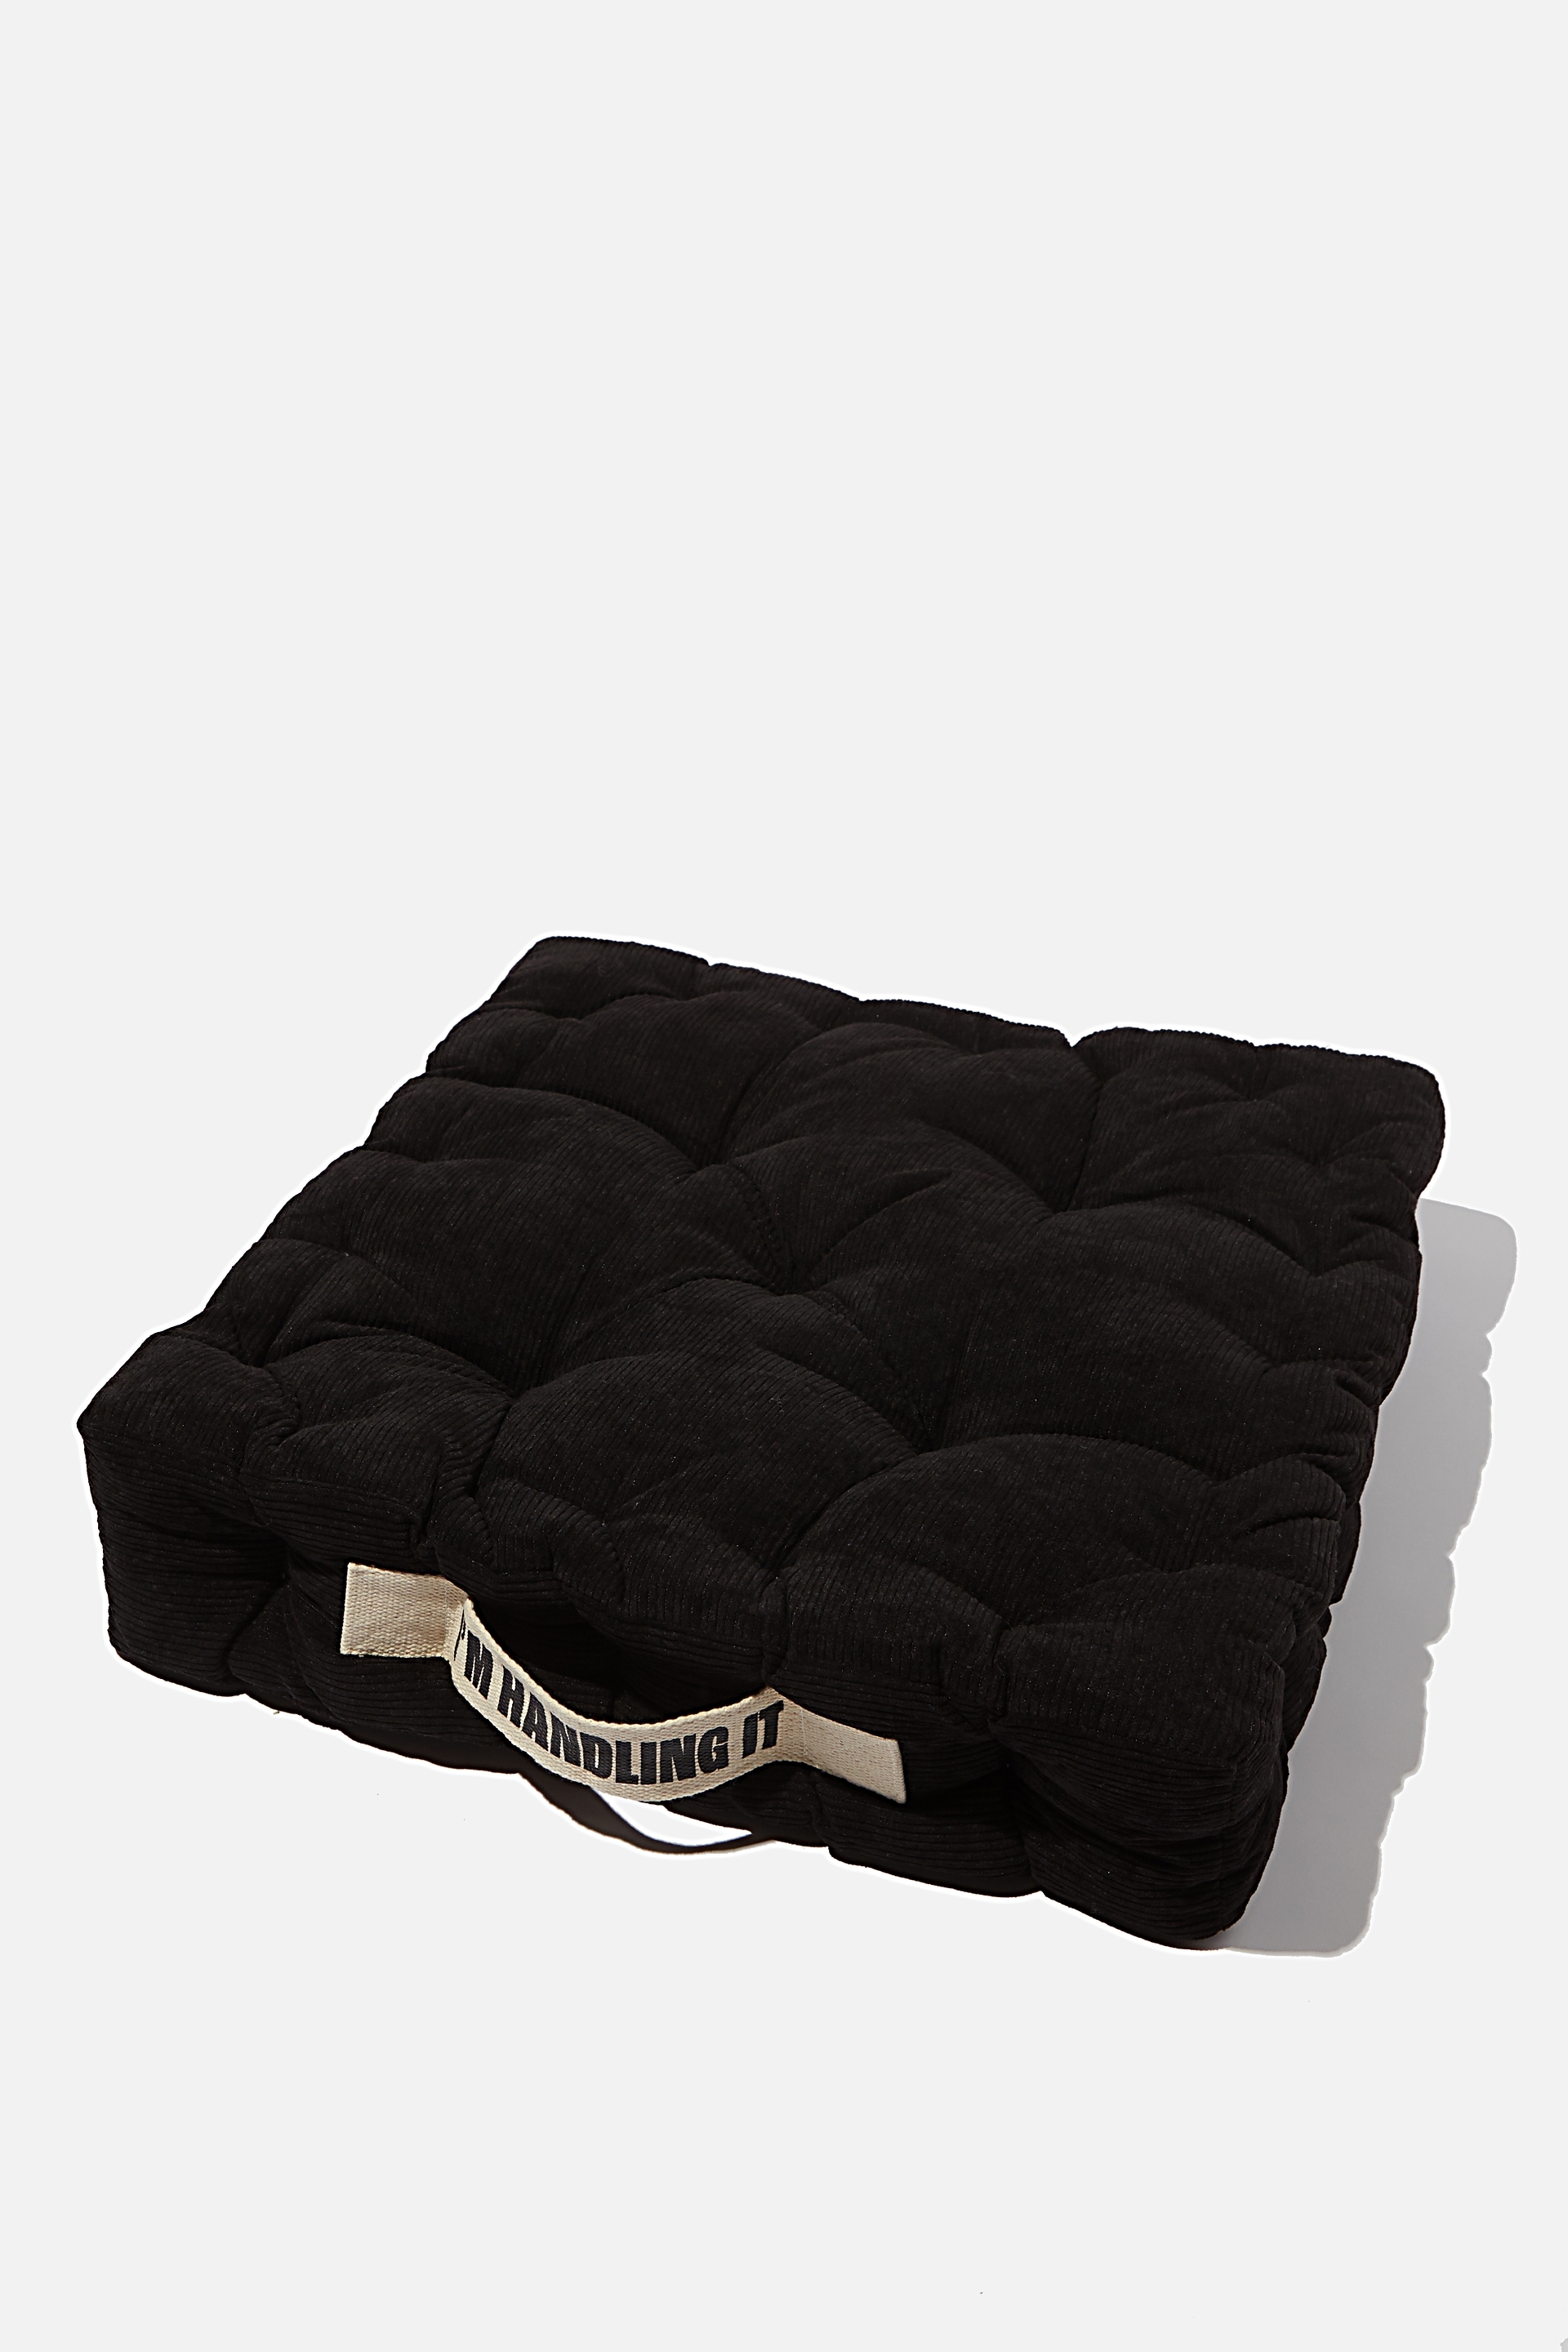 Typo - Floor Cushion - Black corduroy